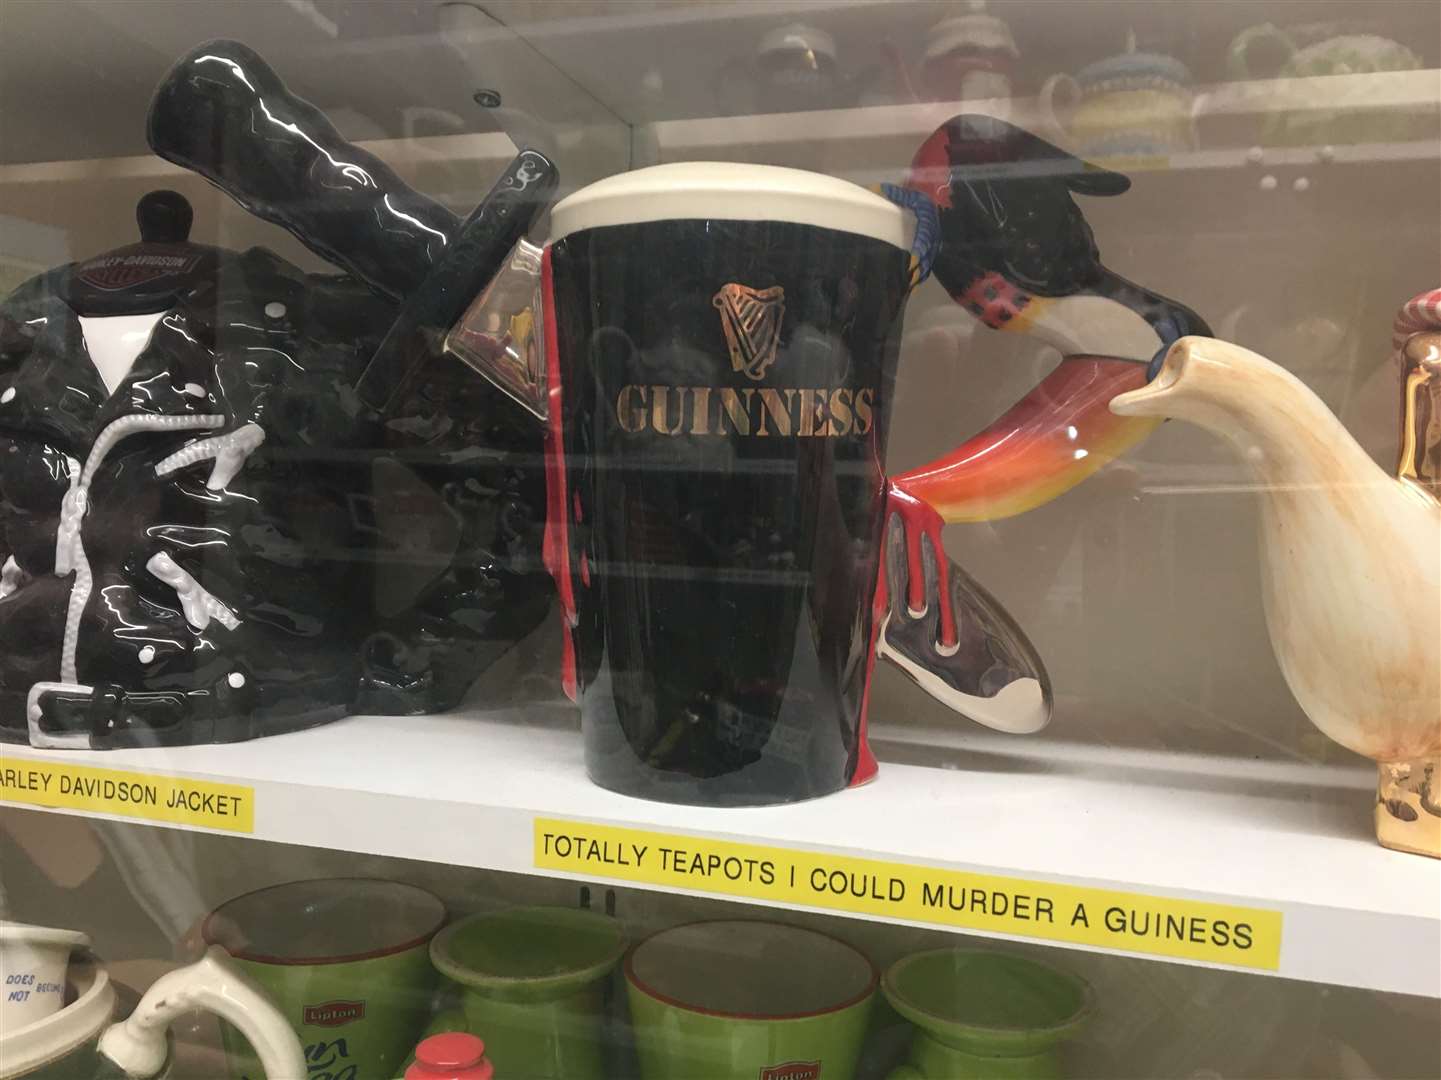 Guinness anyone?